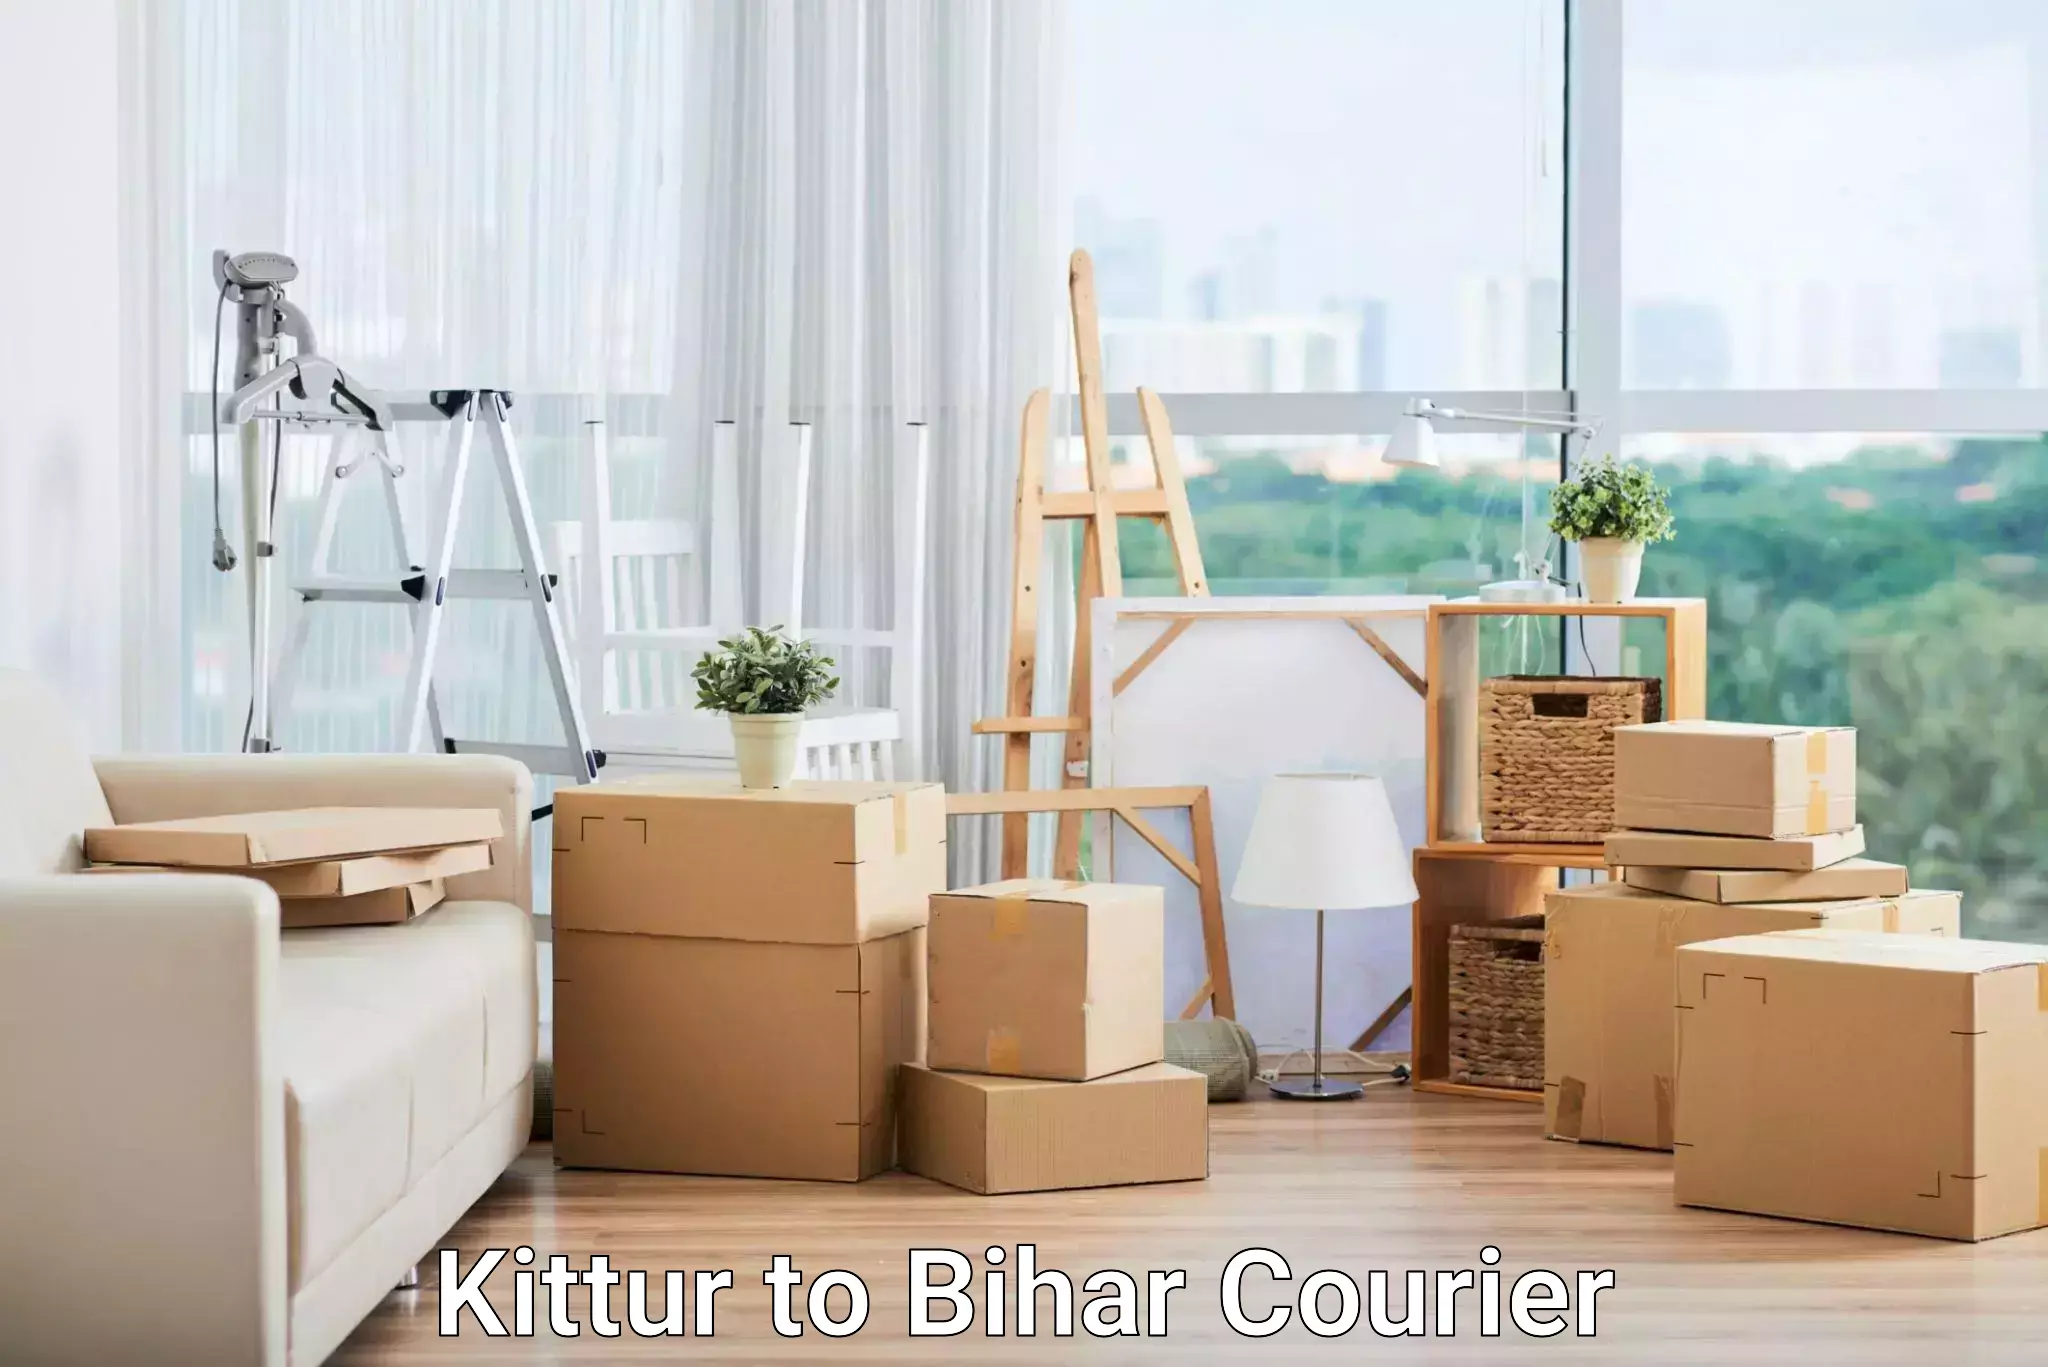 Courier service innovation Kittur to Bihar